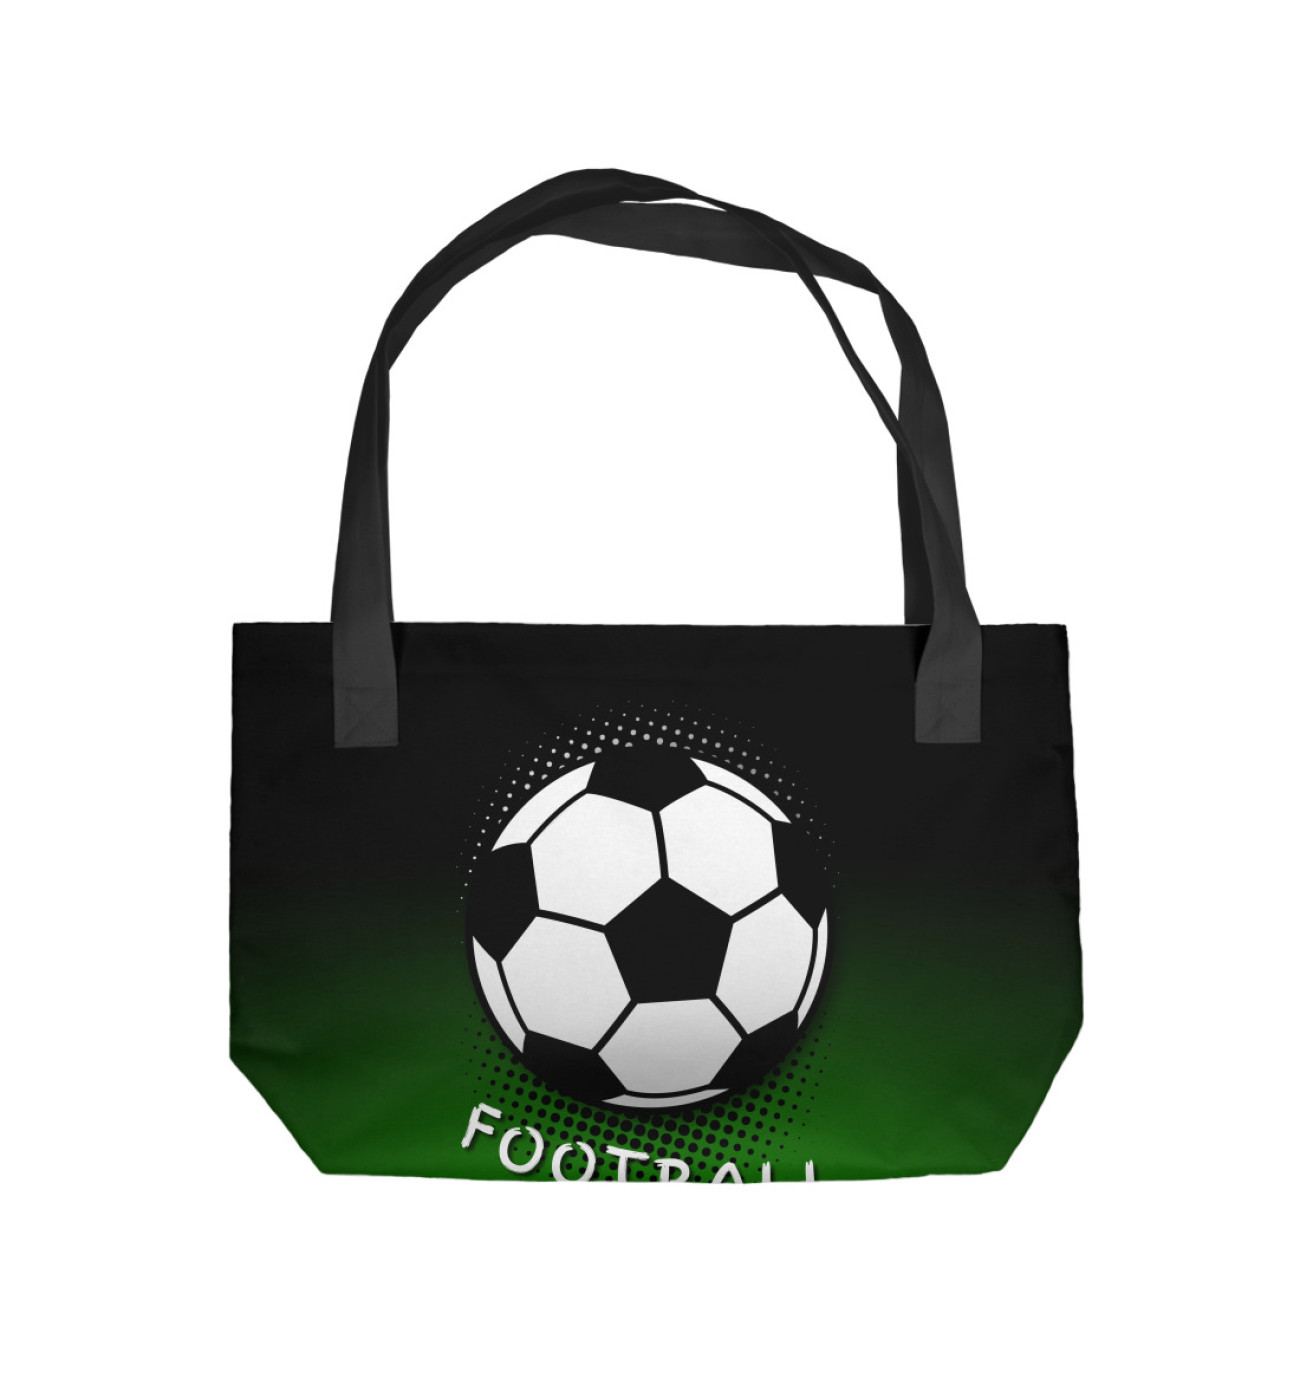 Пляжная сумка Football, артикул: FTO-156000-sup